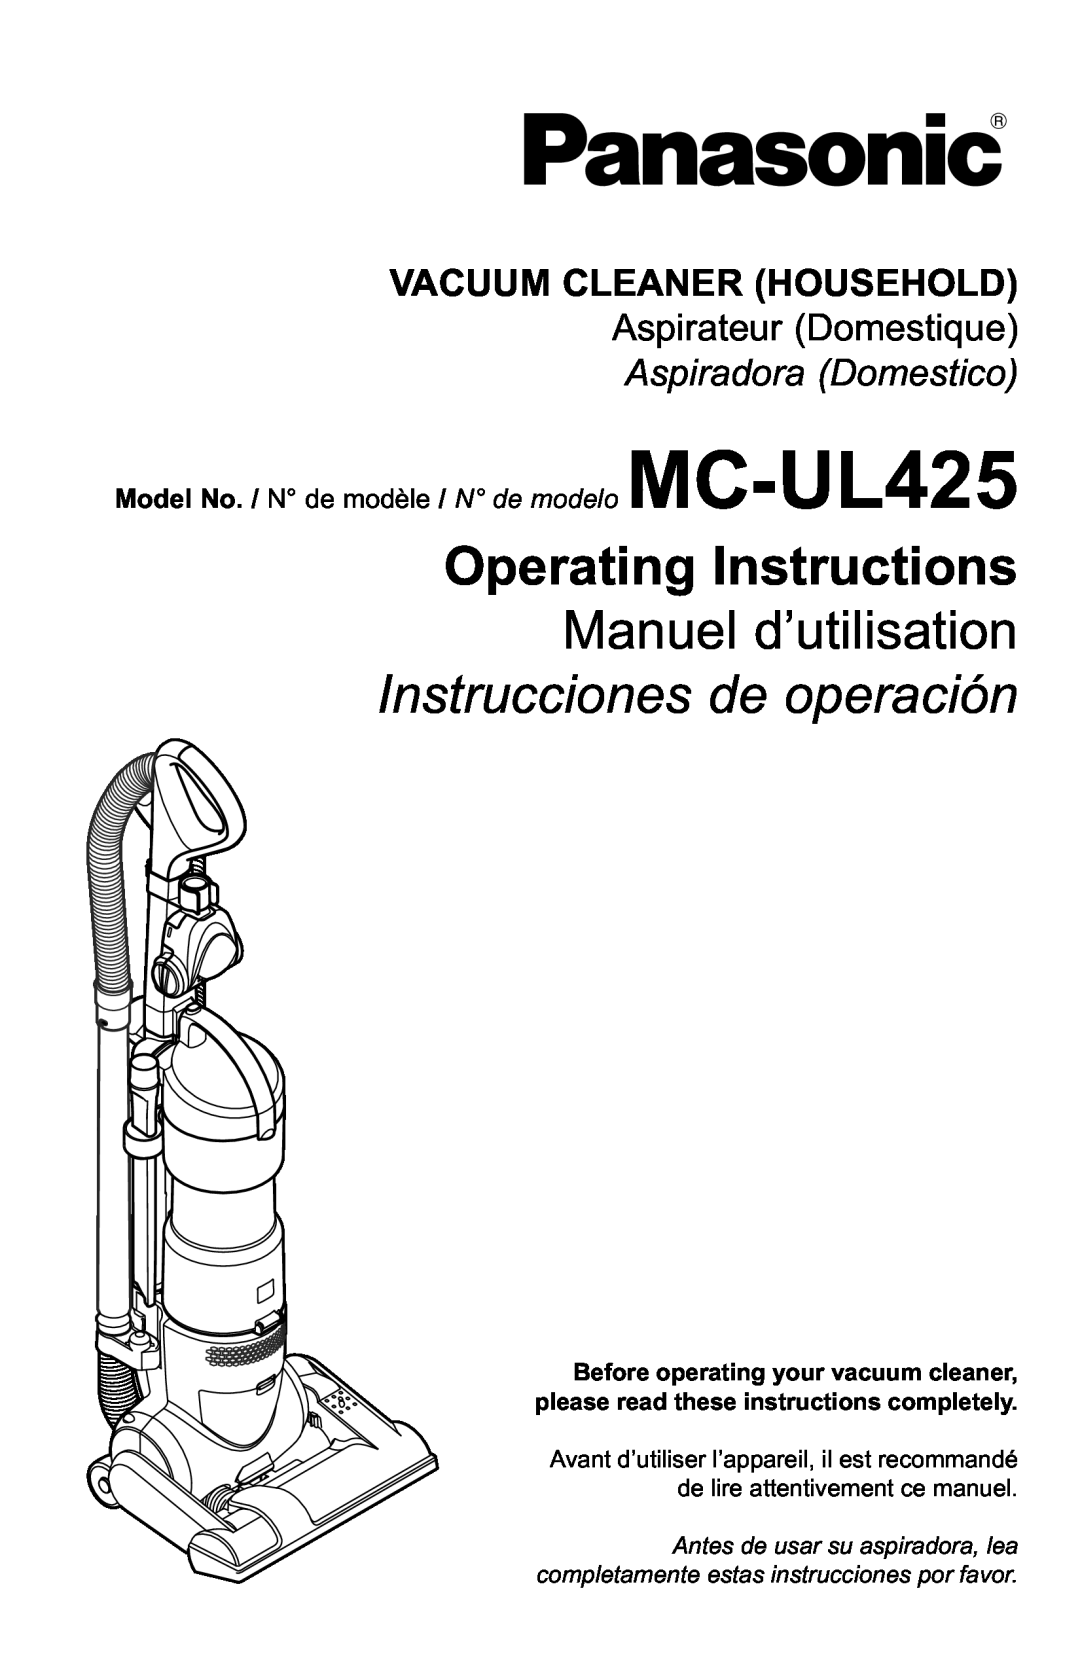 Panasonic MC-UL425 manuel dutilisation Operating Instructions, Manuel d’utilisation, Vacuum Cleaner Household 